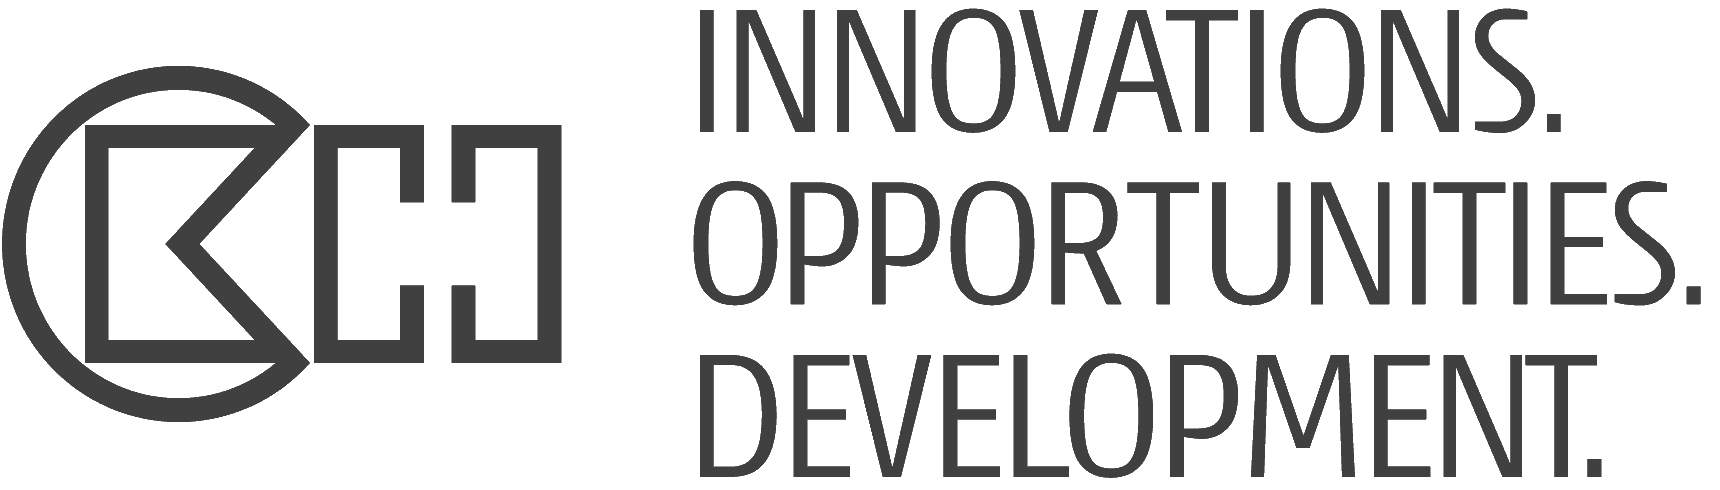 CKH Innovations Opportunities Development